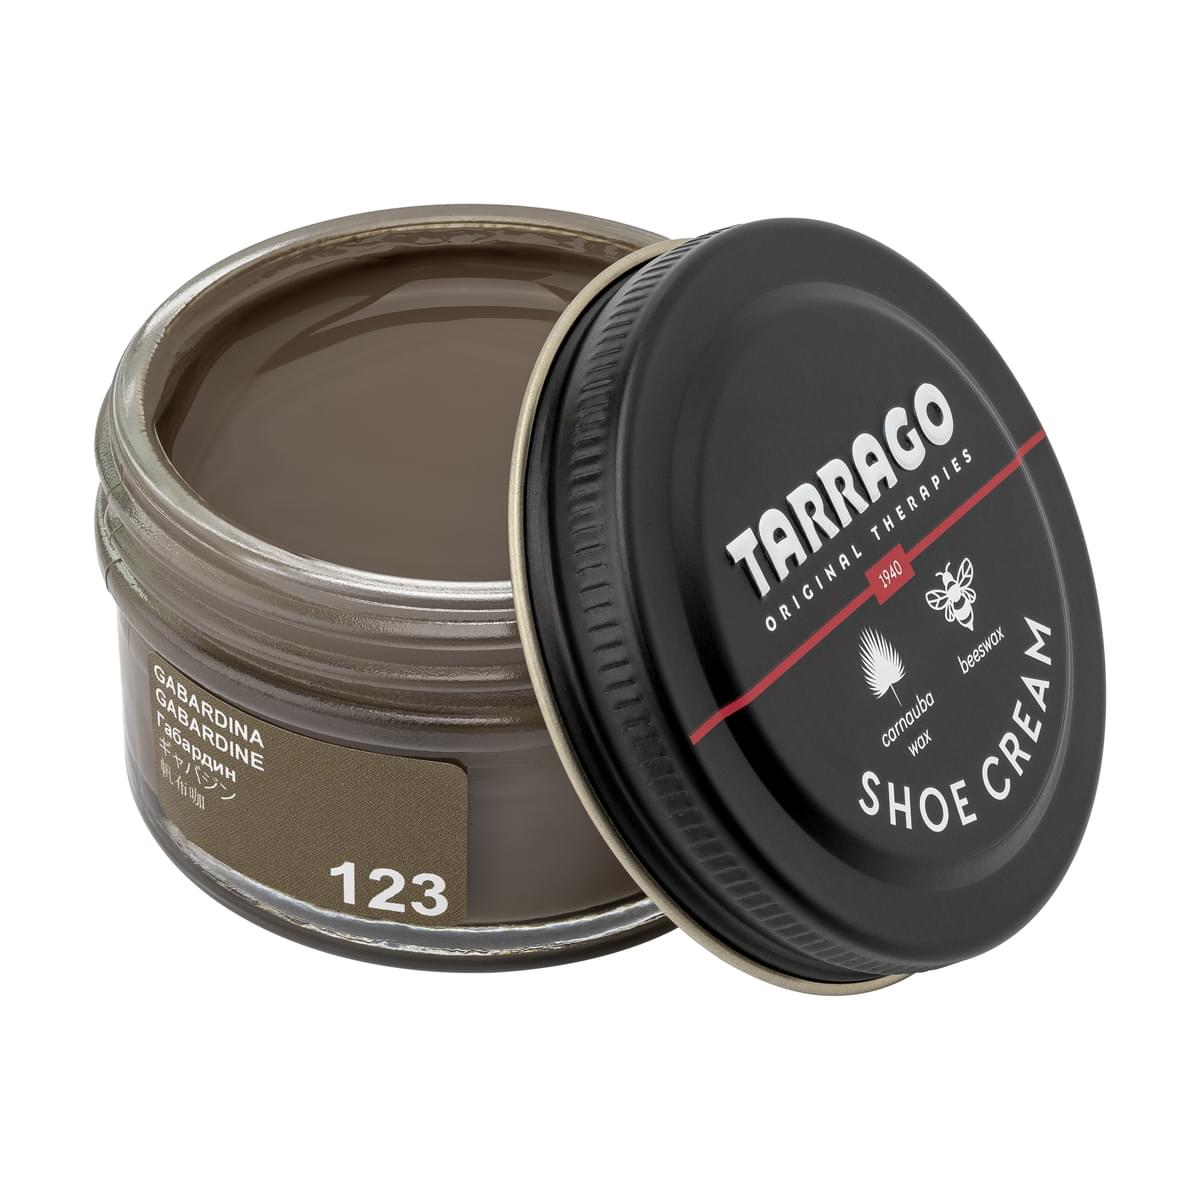 Tarrago Shoe Cream  - Gabardine - 123